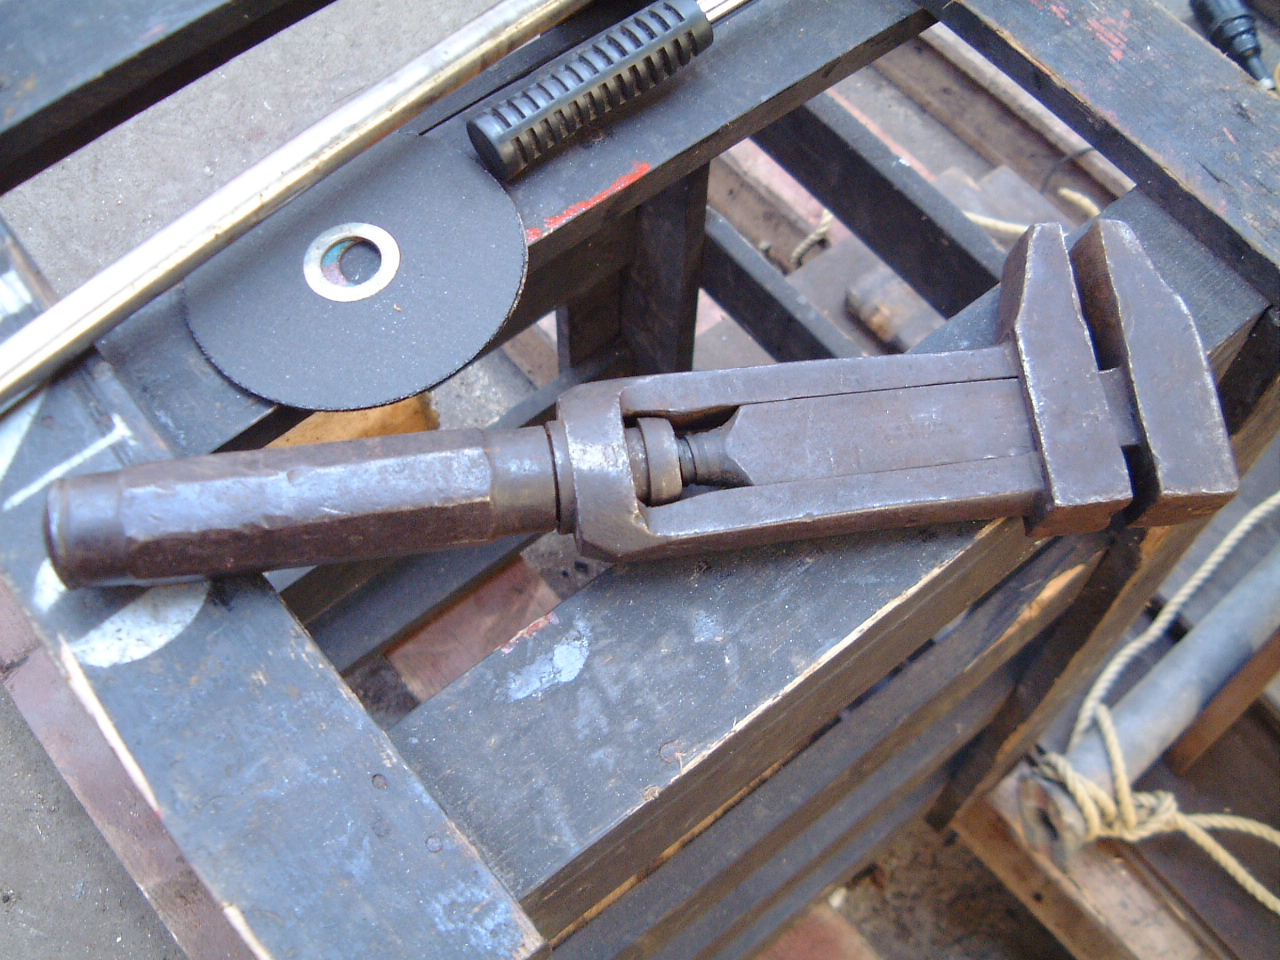 objects disc spanner adjustable adjustablespanner wrench metal stuff grip